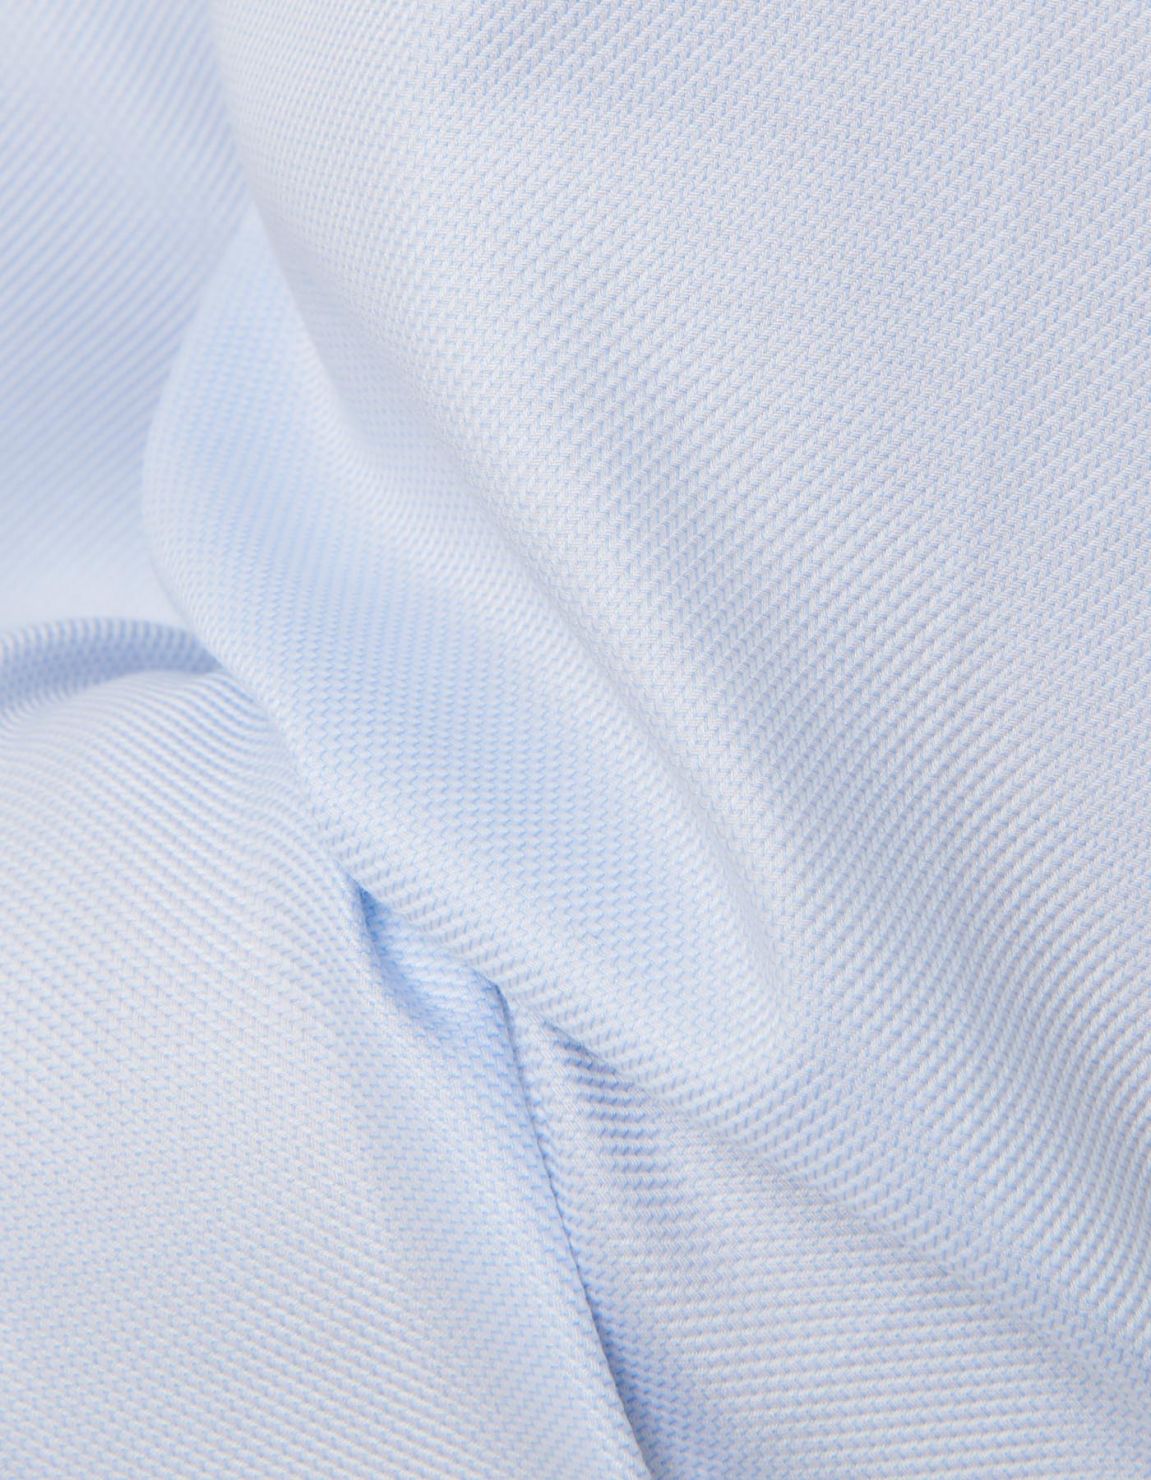 Light Blue Textured Pattern Shirt Collar spread Tailor Custom Fit 4